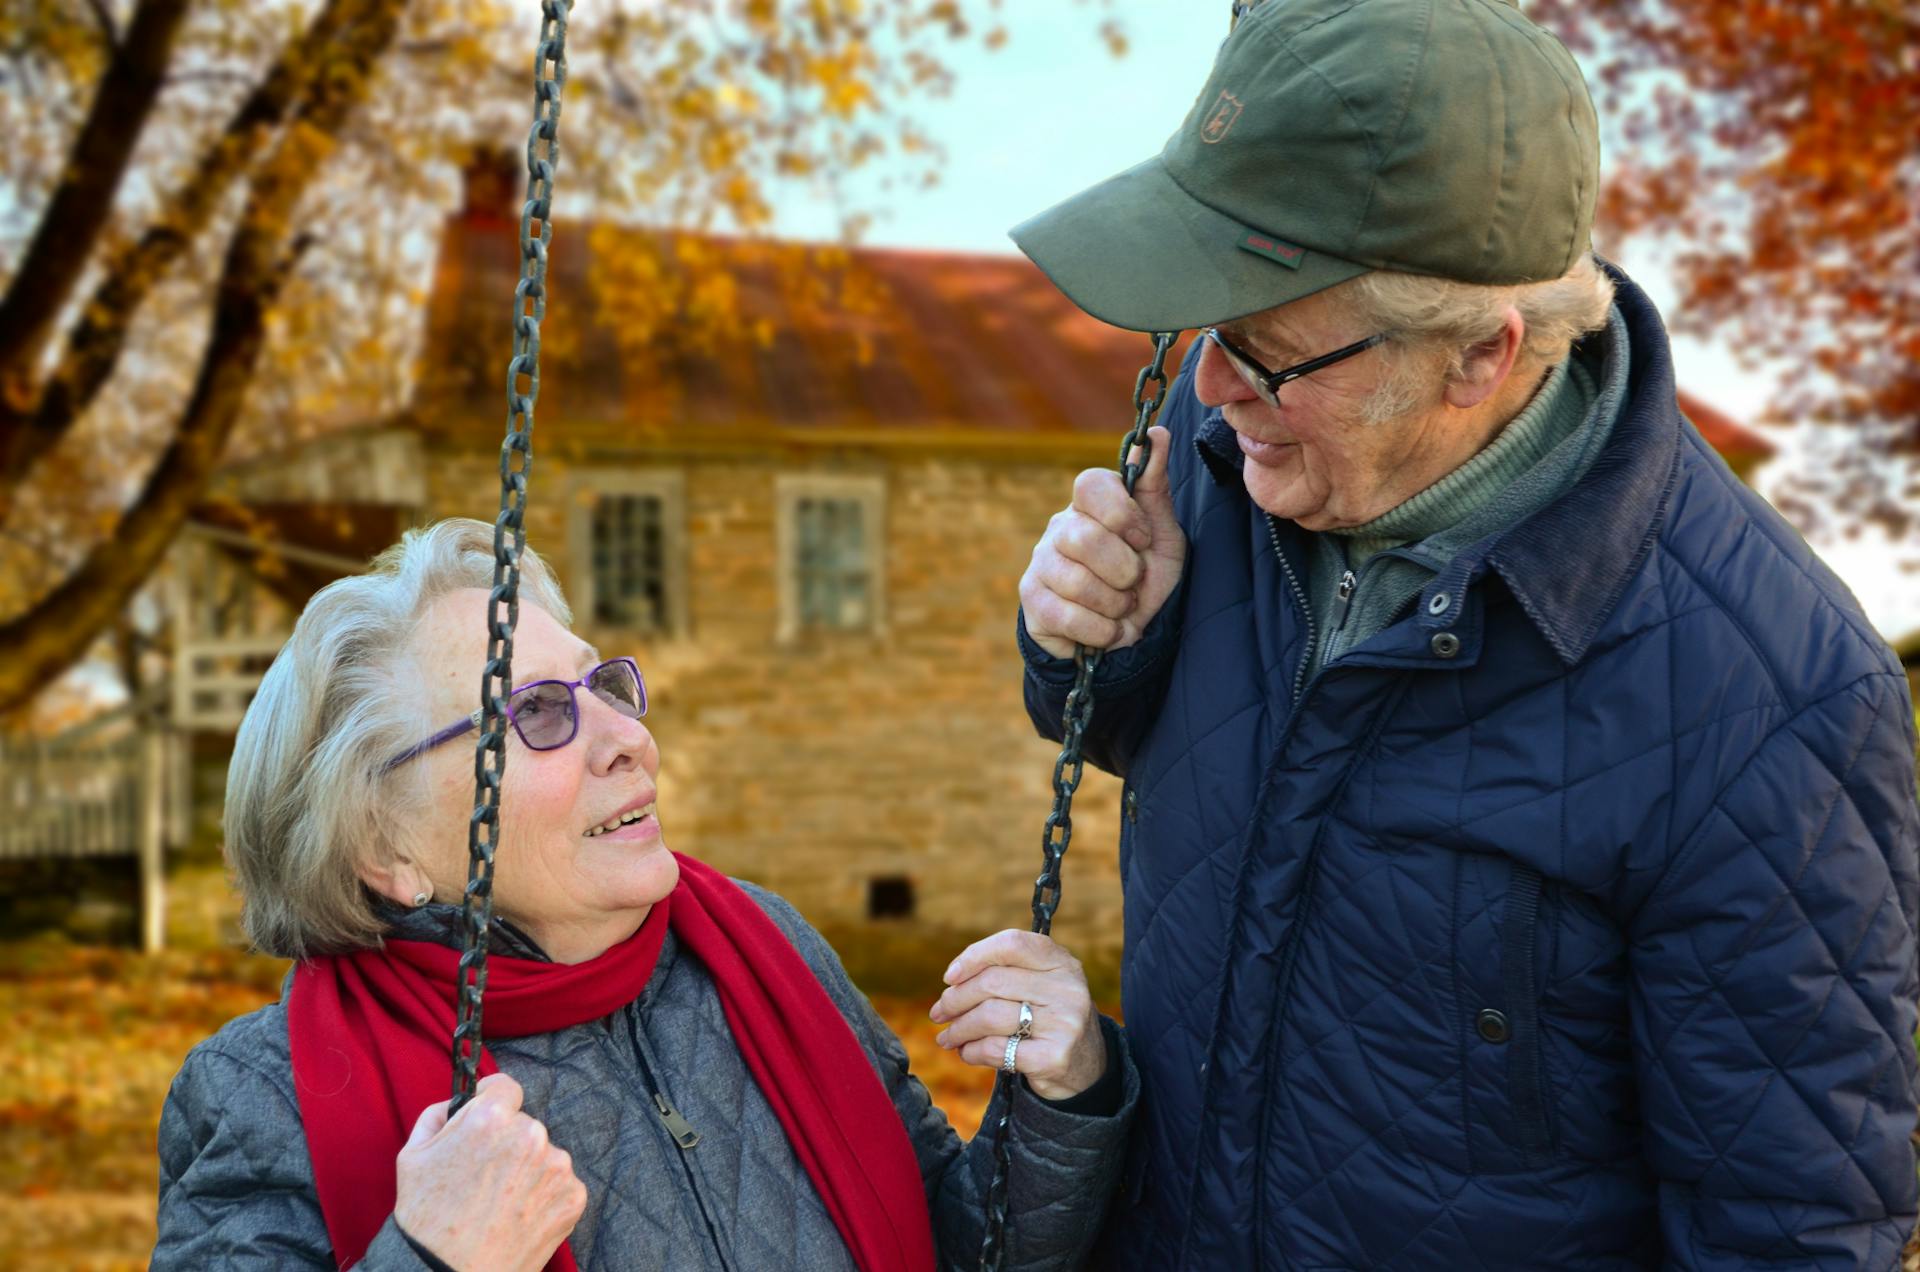 An elderly man standing beside his wife on a swing | Source: Pexels